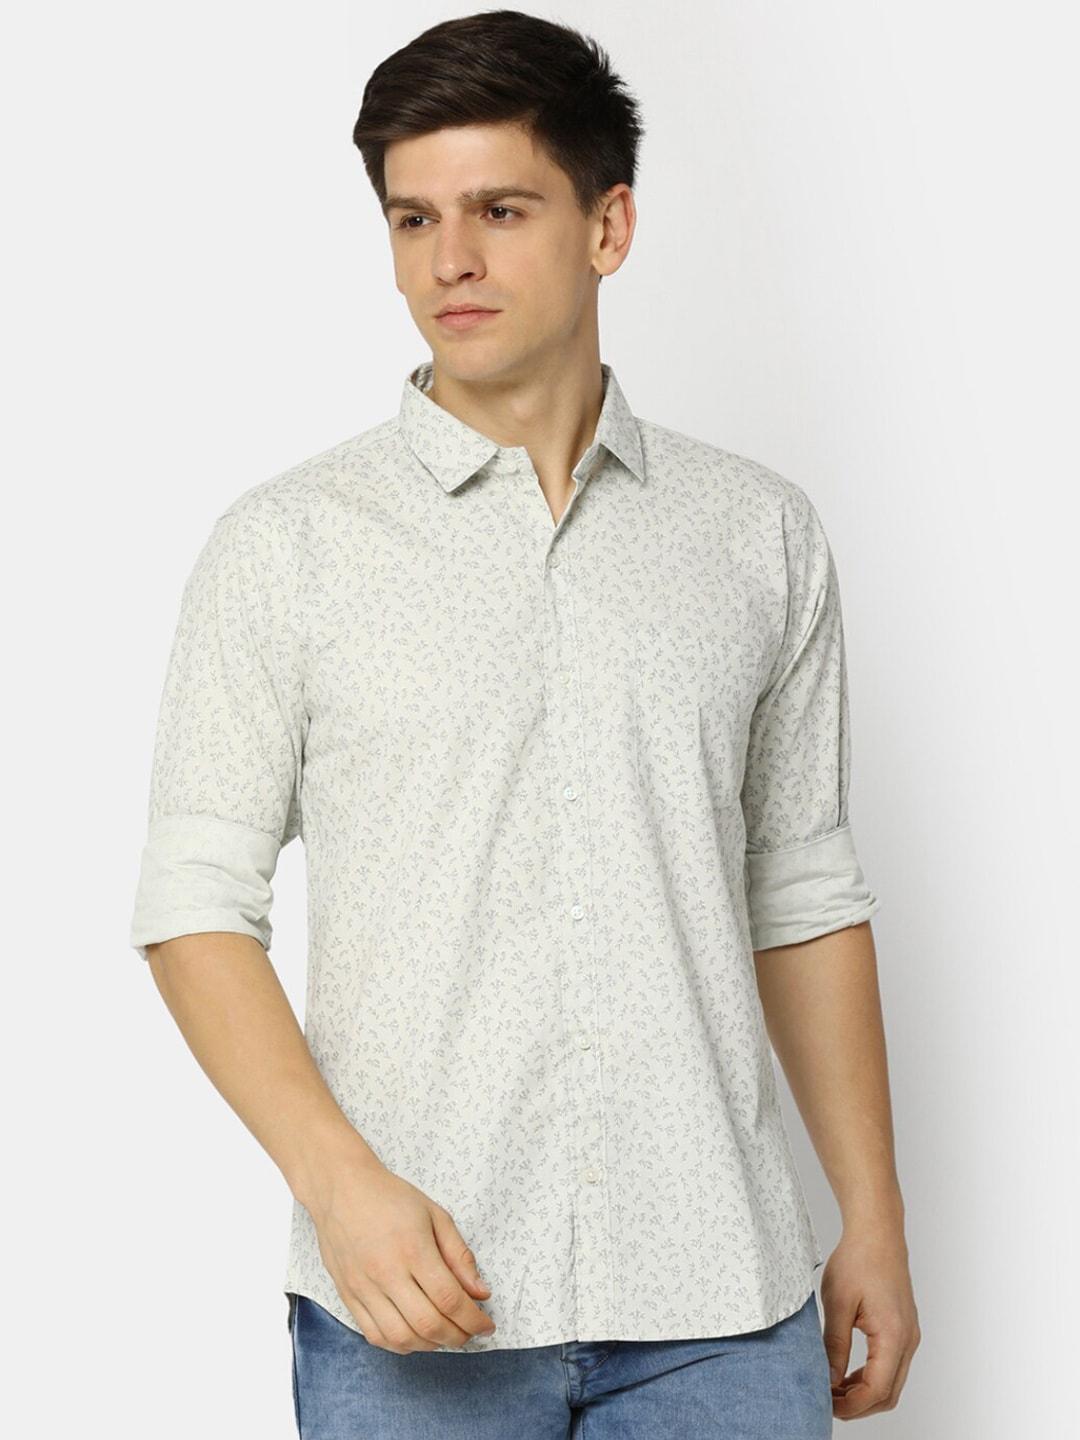 v-mart floral printed cotton casual shirt